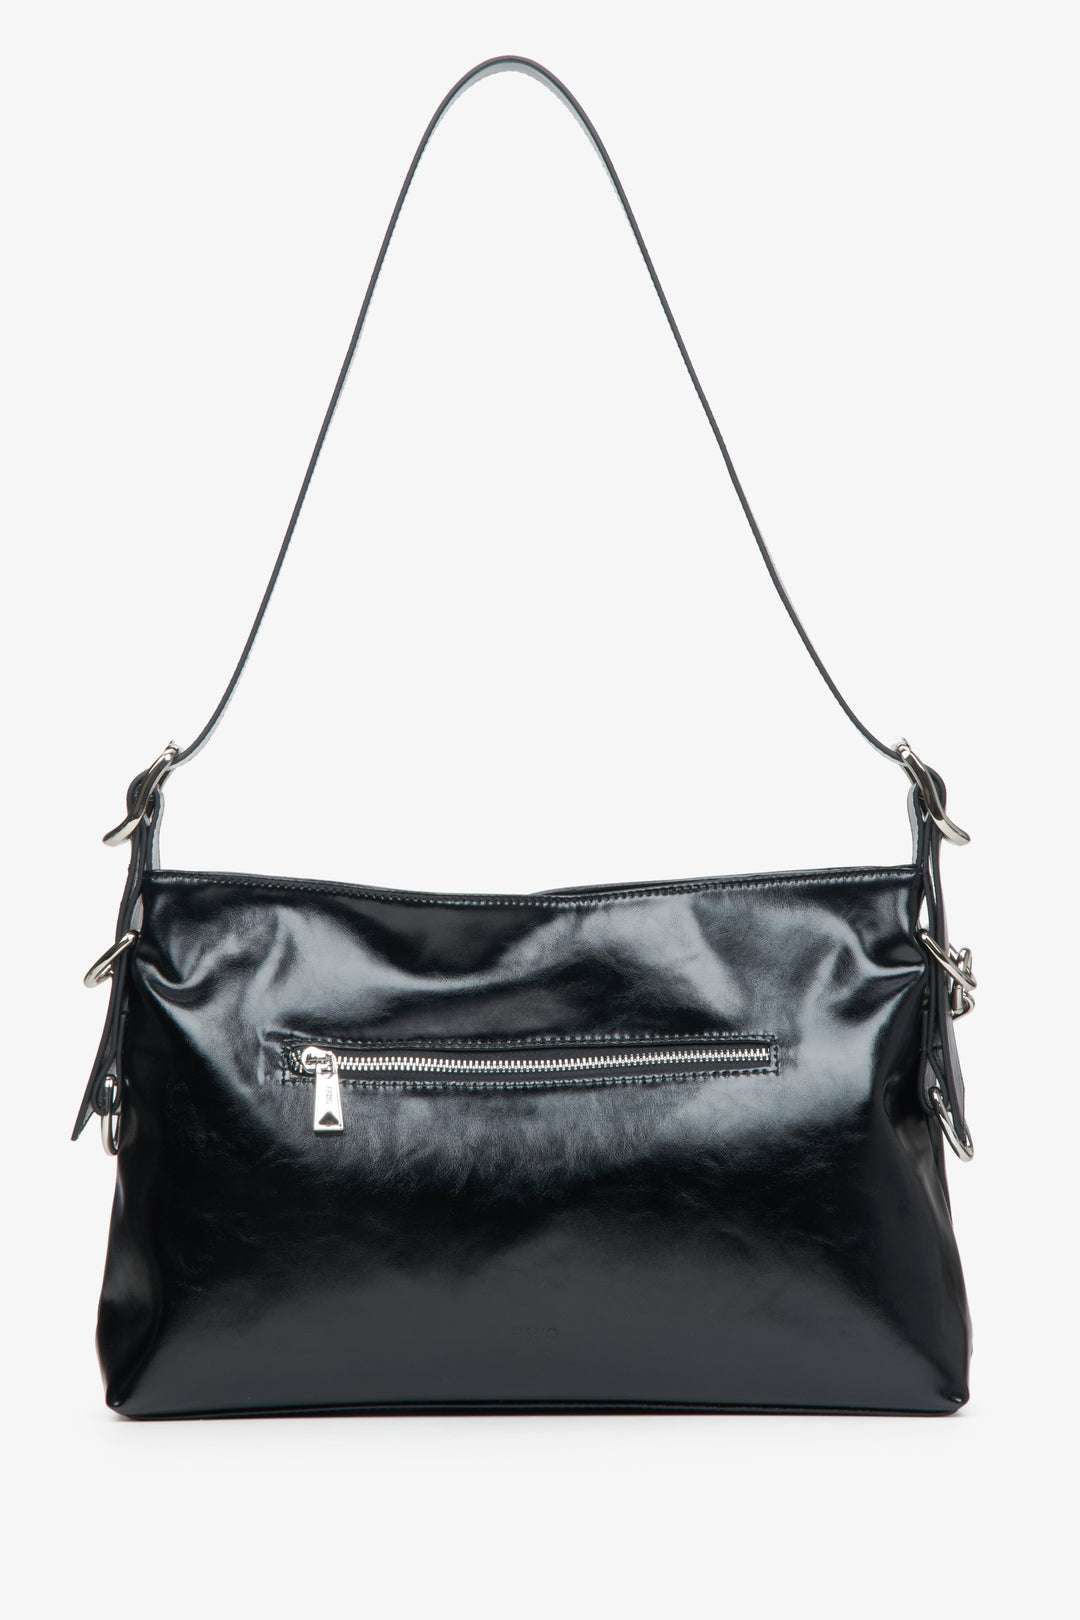 Handy black women's bag Estro with a silver chain.